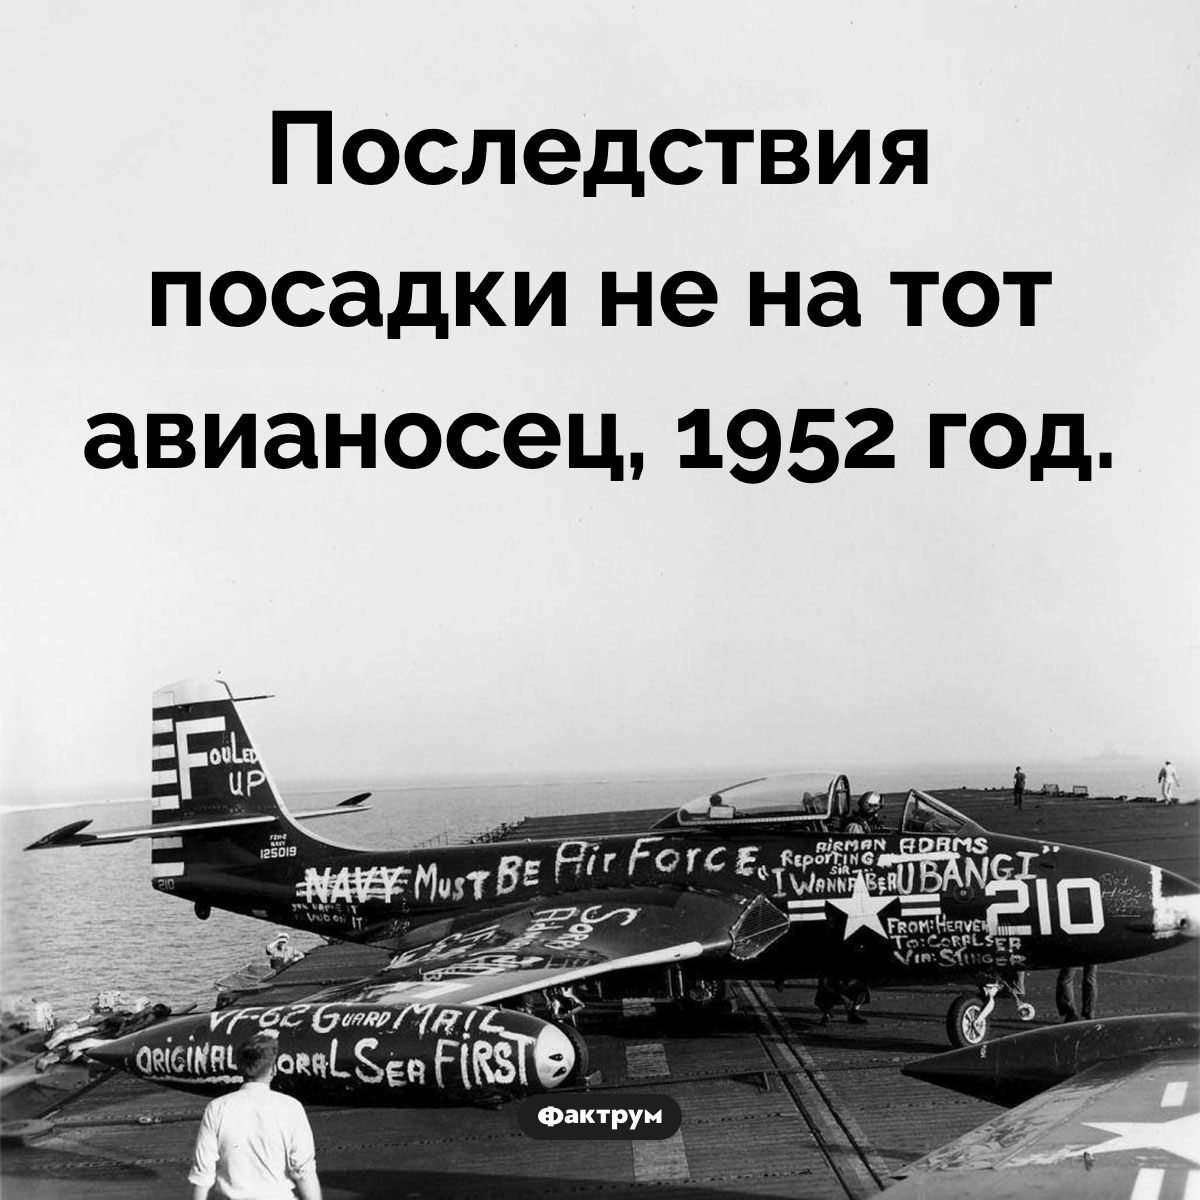 Последствия посадки не на тот авианосец. Последствия посадки не на тот авианосец, 1952 год.